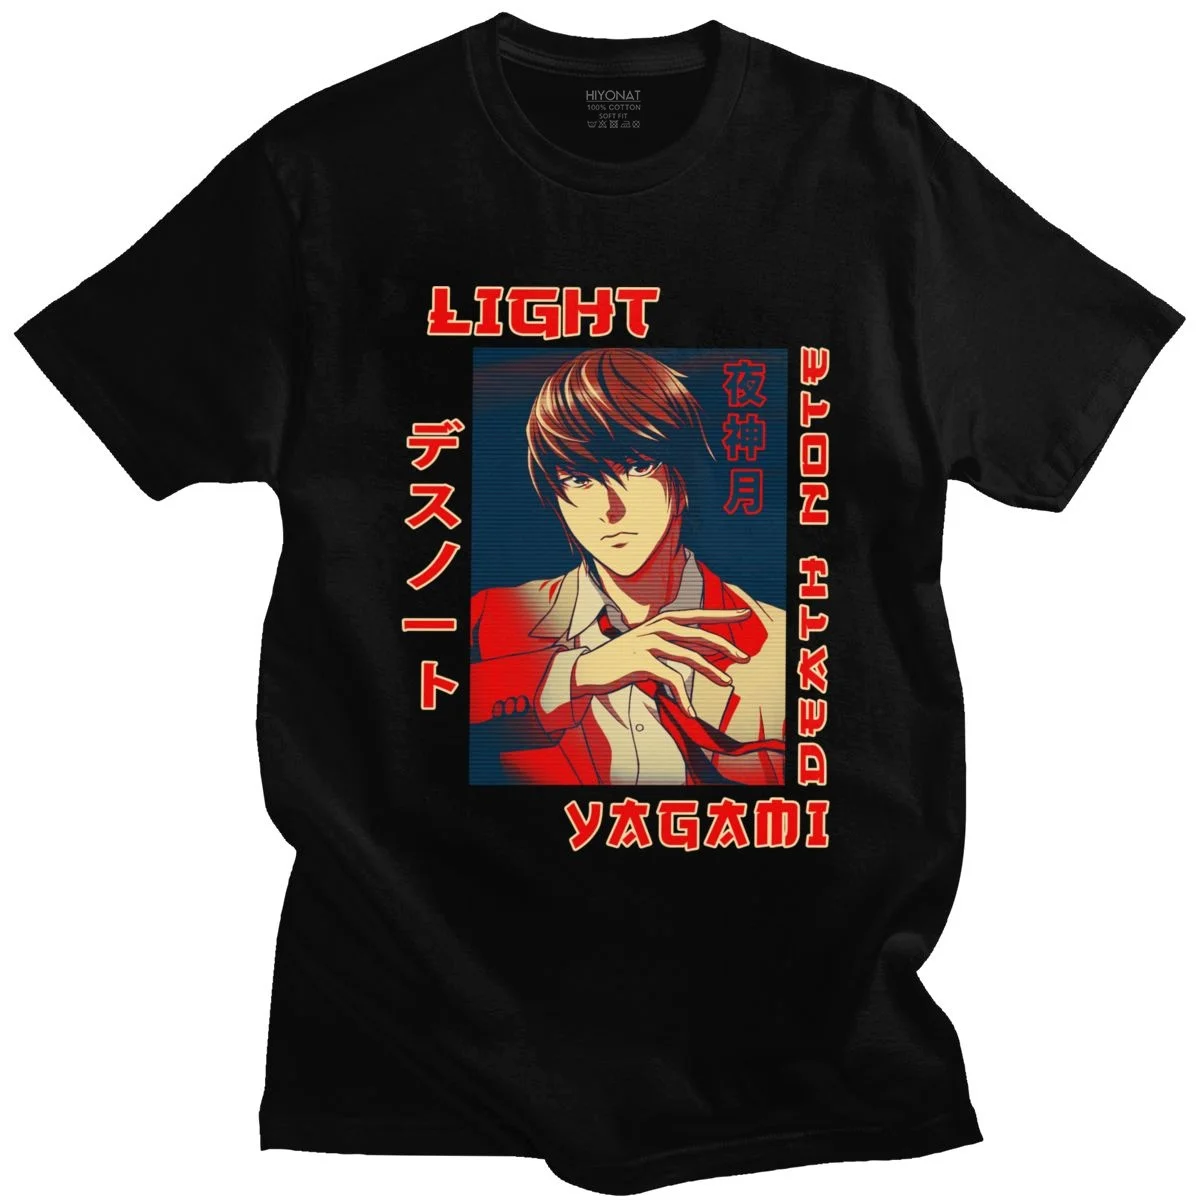 Stylish Mens Light Yagami Death Note T-Shirts Short Sleeves Cotton Tshirt Graphic T-shirt Manga Anime Tee Tops Apparel Merch